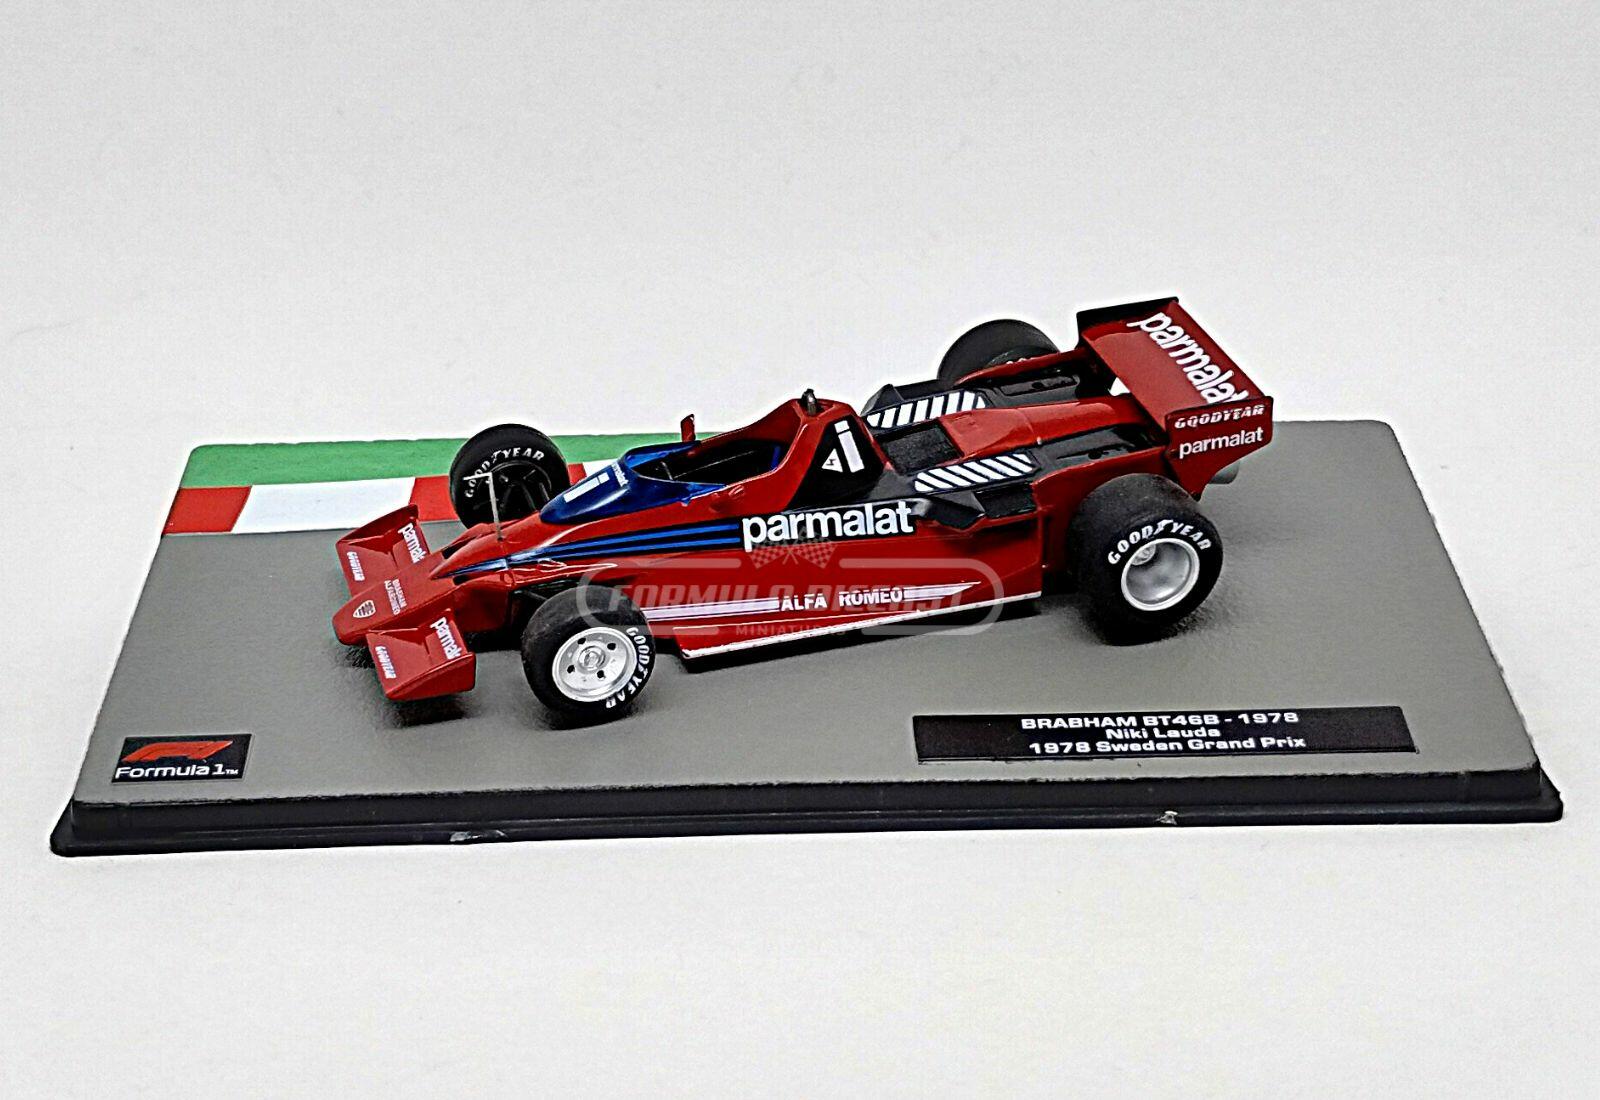 GP Replicas 1:18 Niki Lauda Brabham BT46 versão de teste sujo